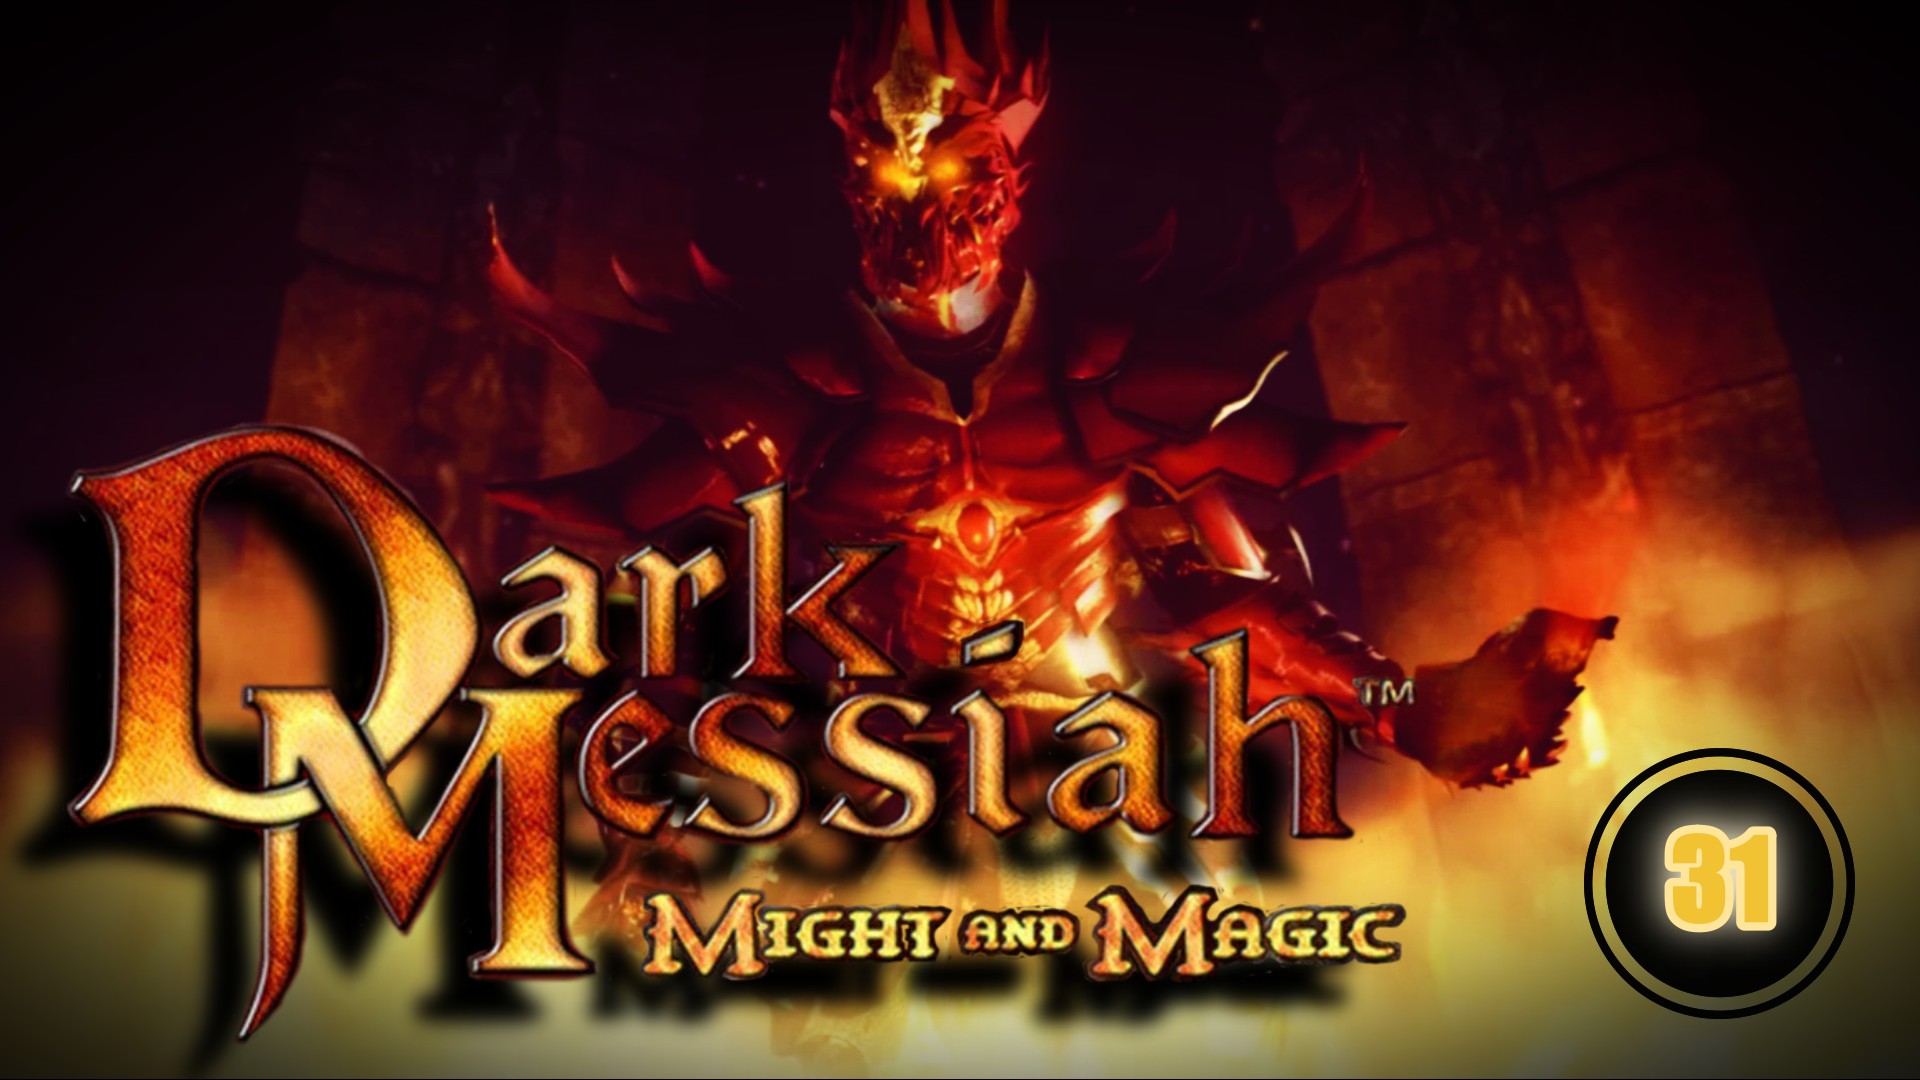 Dark Messiah of Might and Magic 31